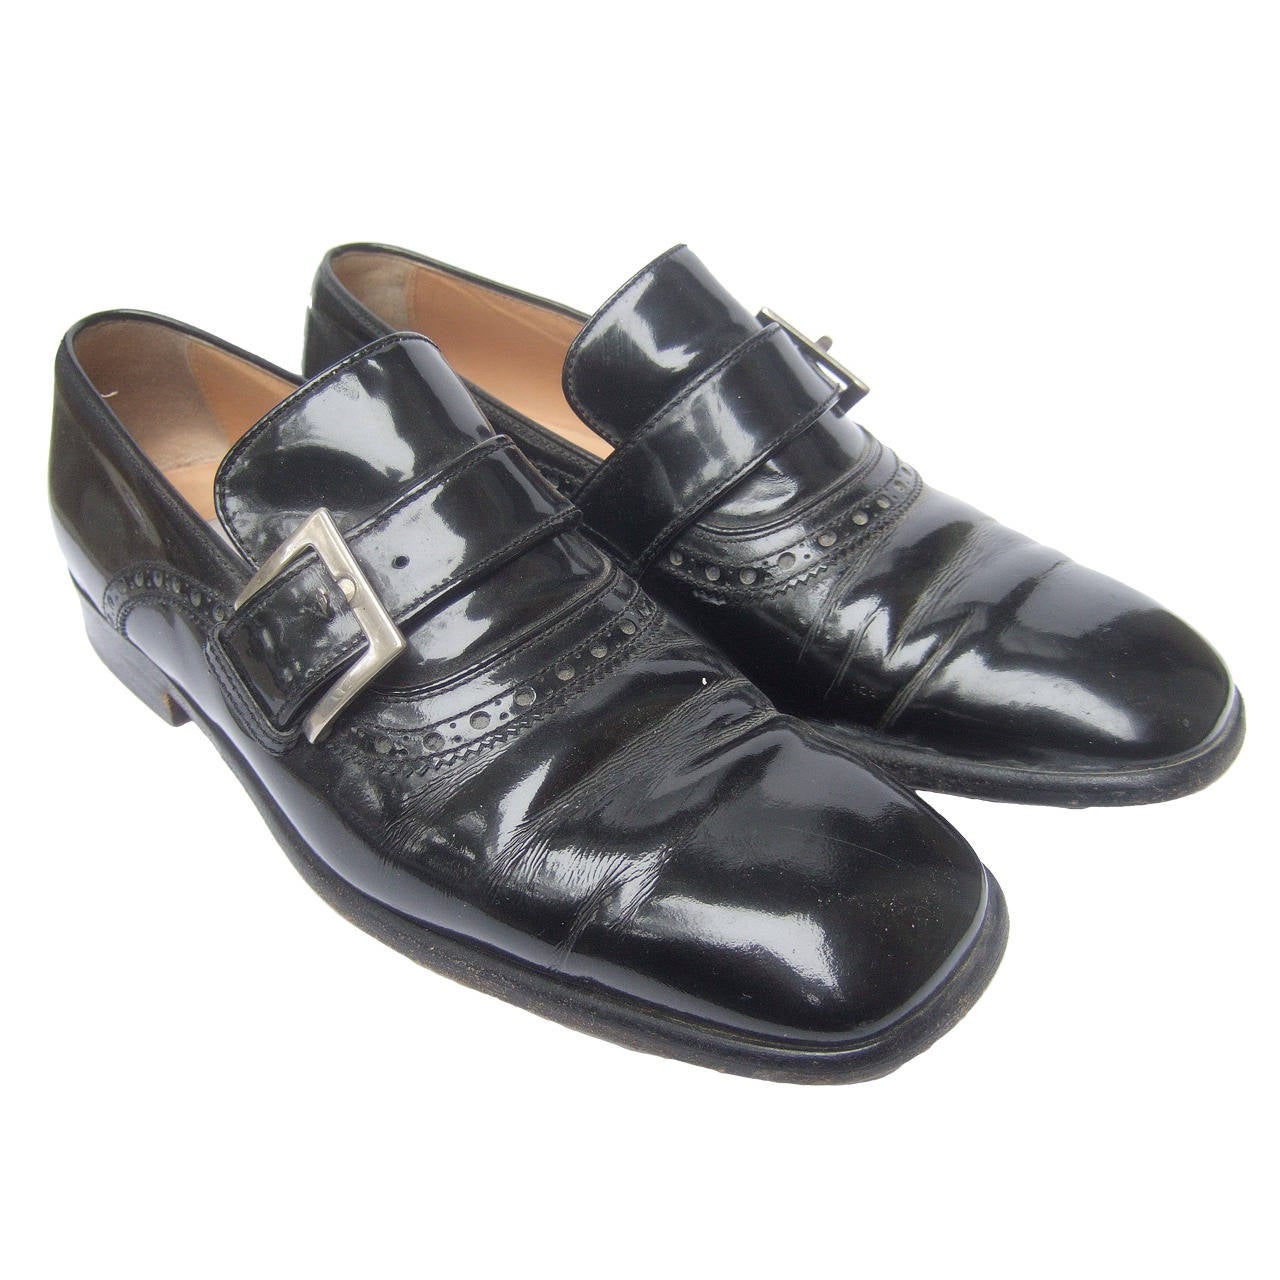 Dolce & Gabbana Men's Black Patent Leather Shoes US Size 8